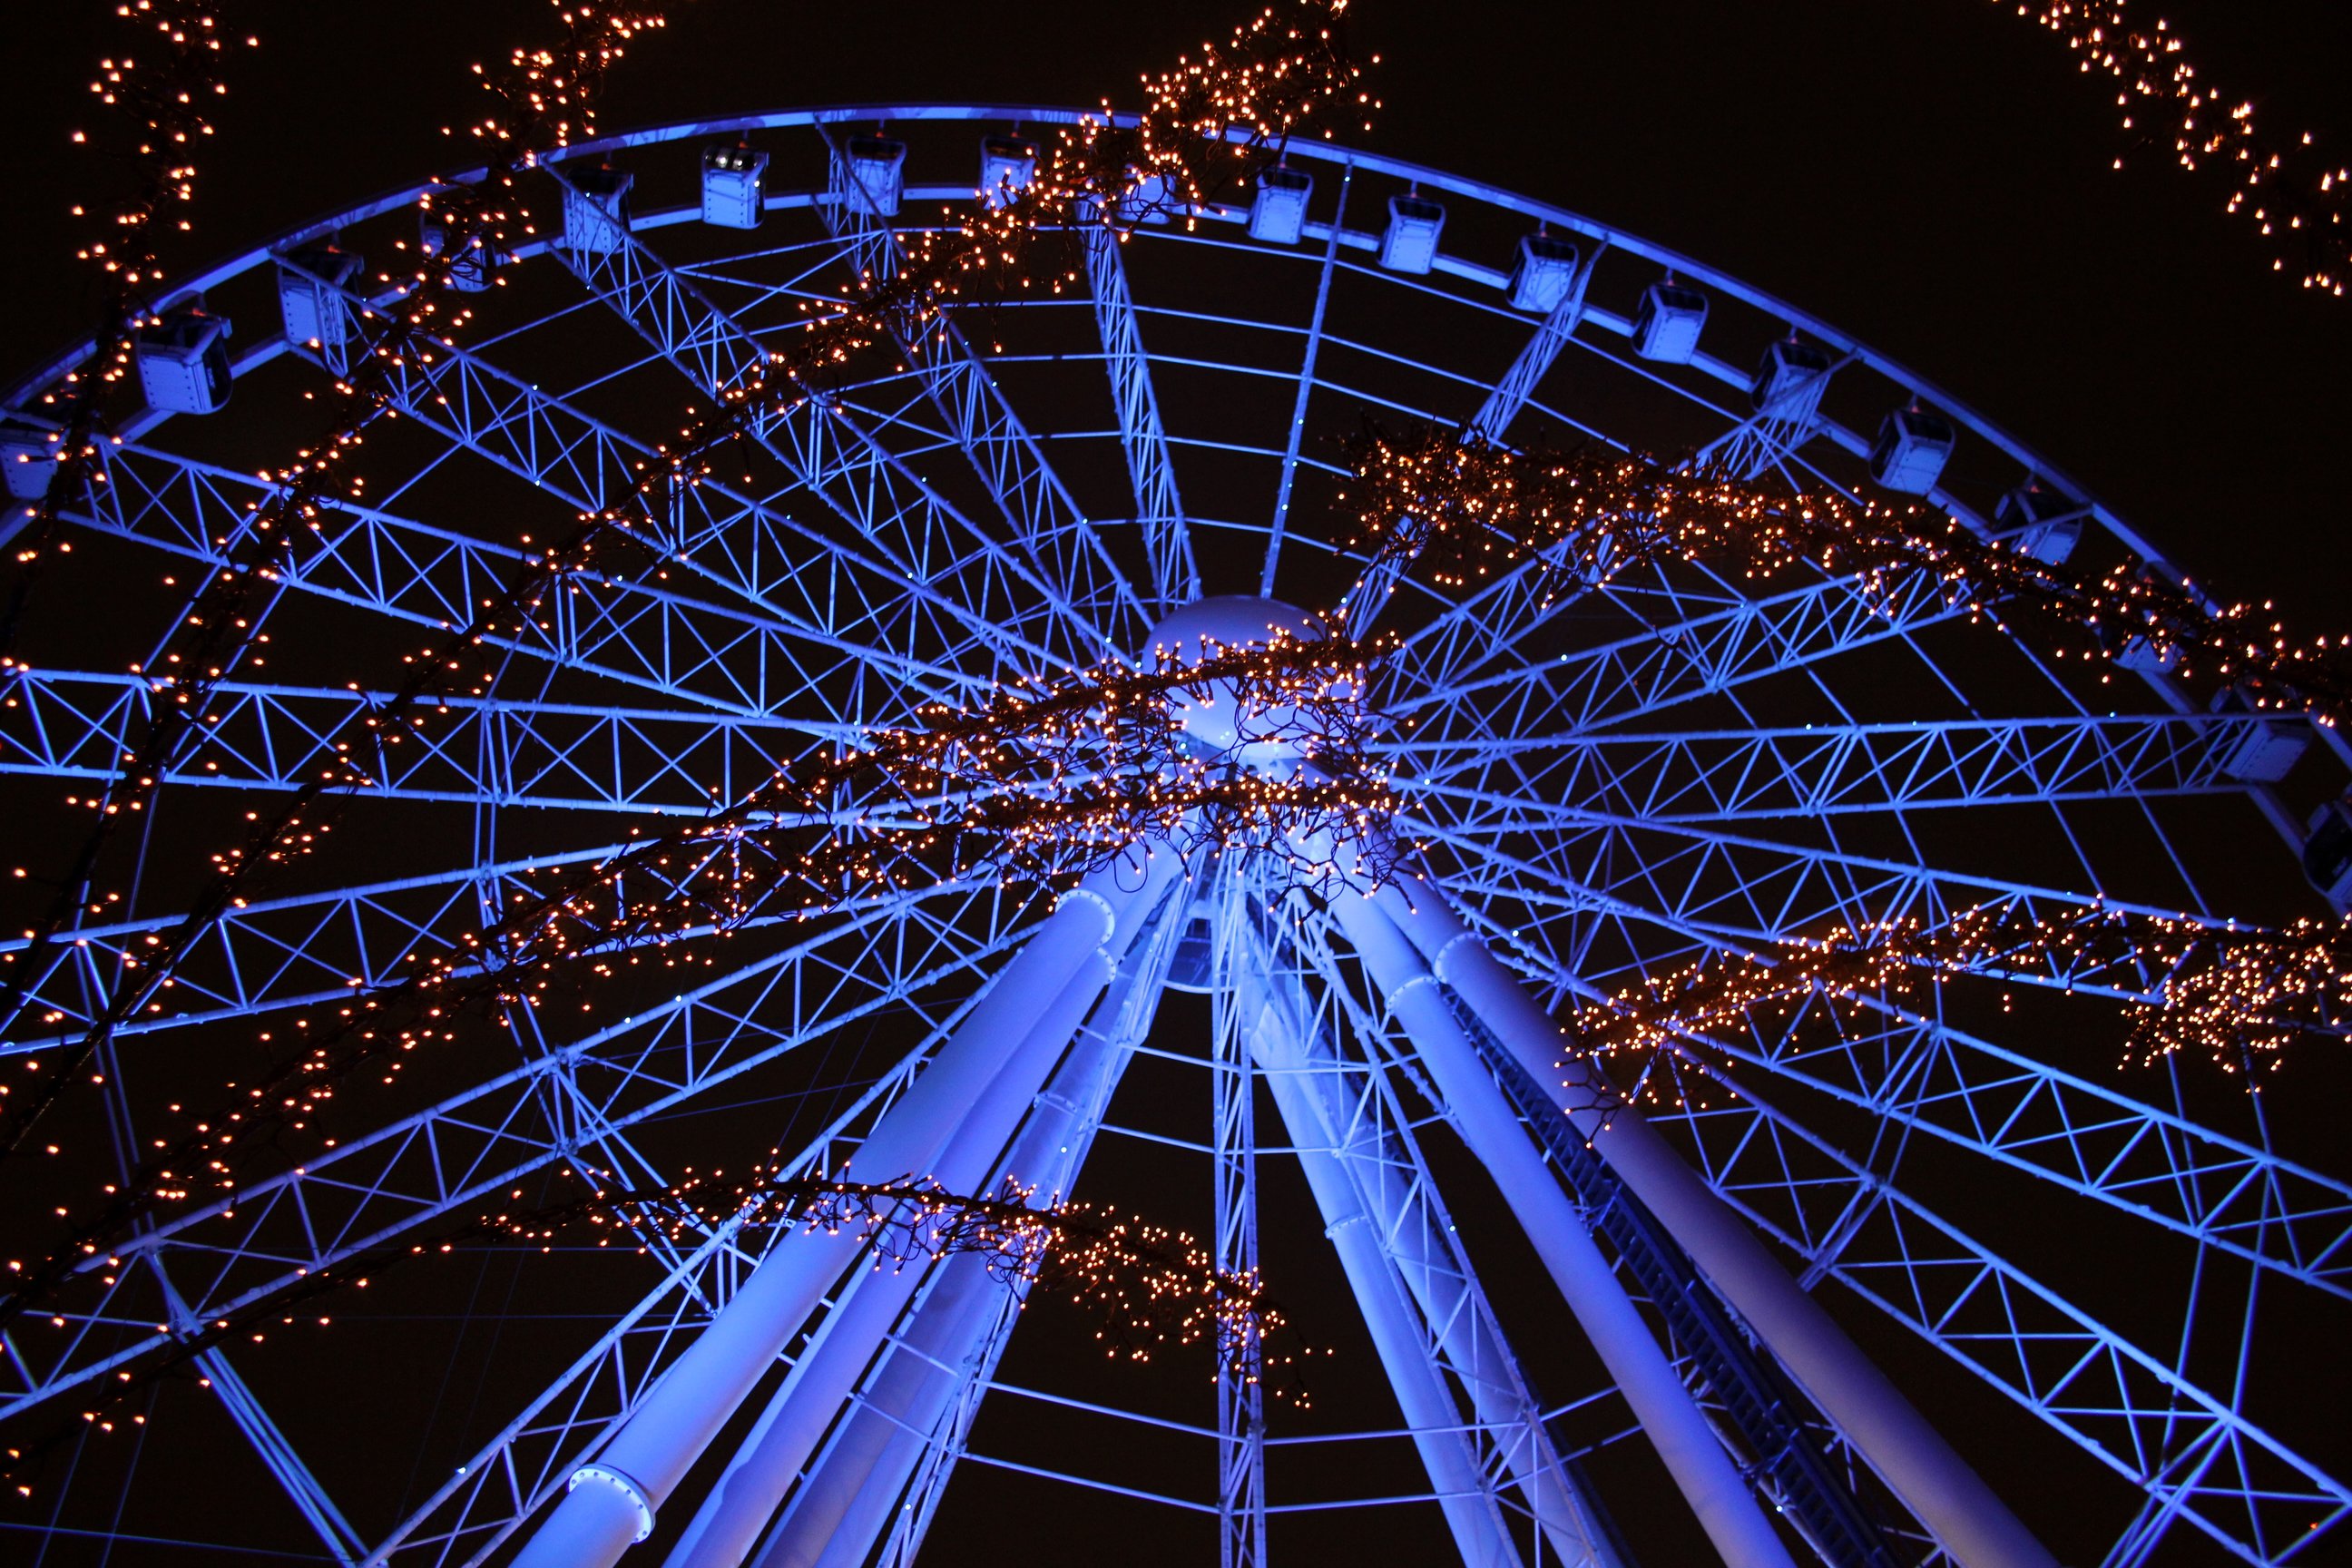 The Ferris Wheel in Liseberg Amusement Park